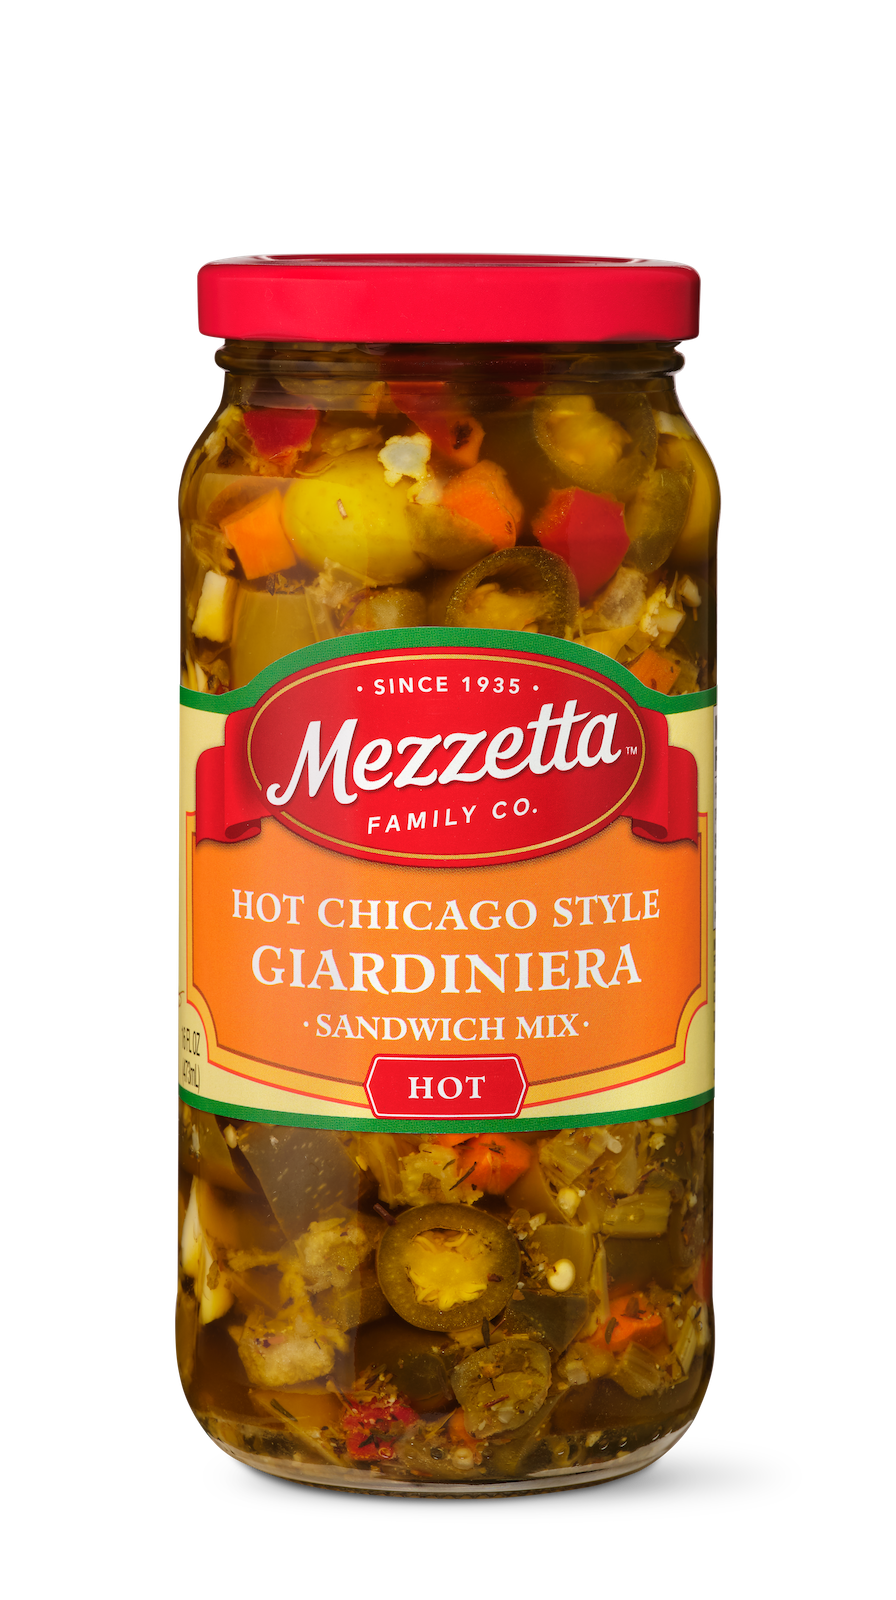 Hot Chicago Style Giardiniera Sandwich Mix